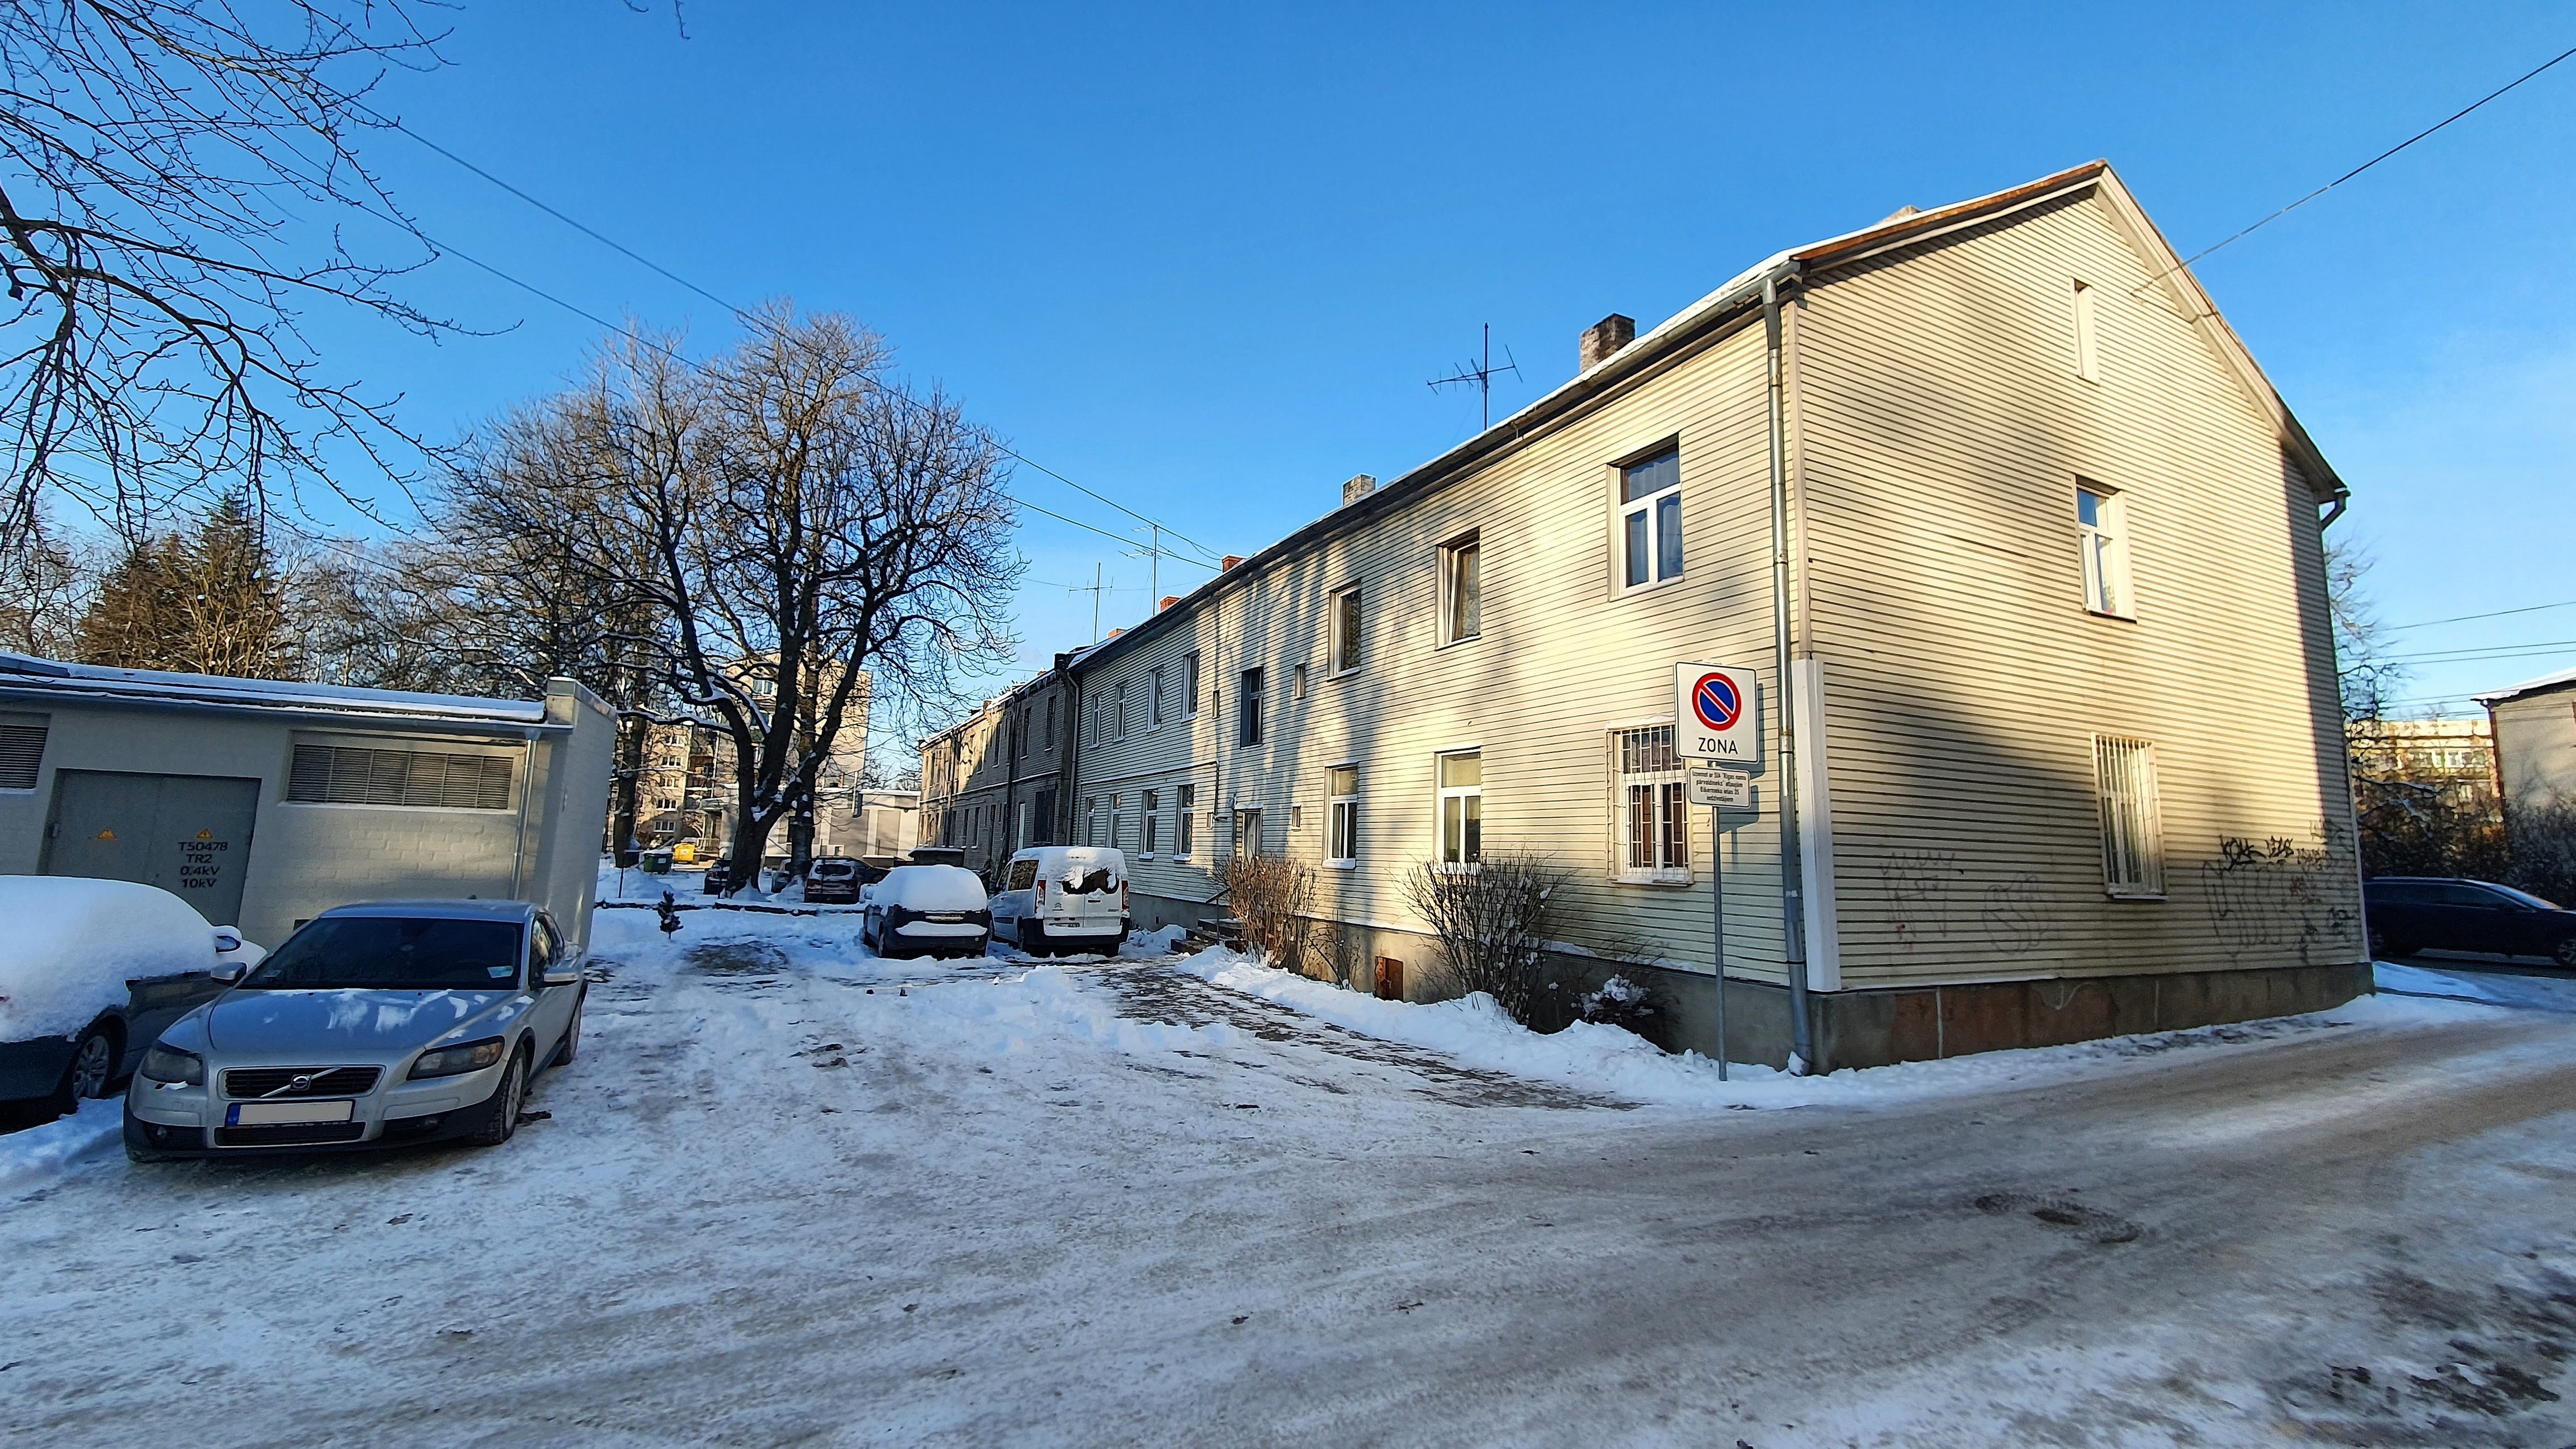 Продают квартиру, улица Biķernieku 35 - Изображение 1